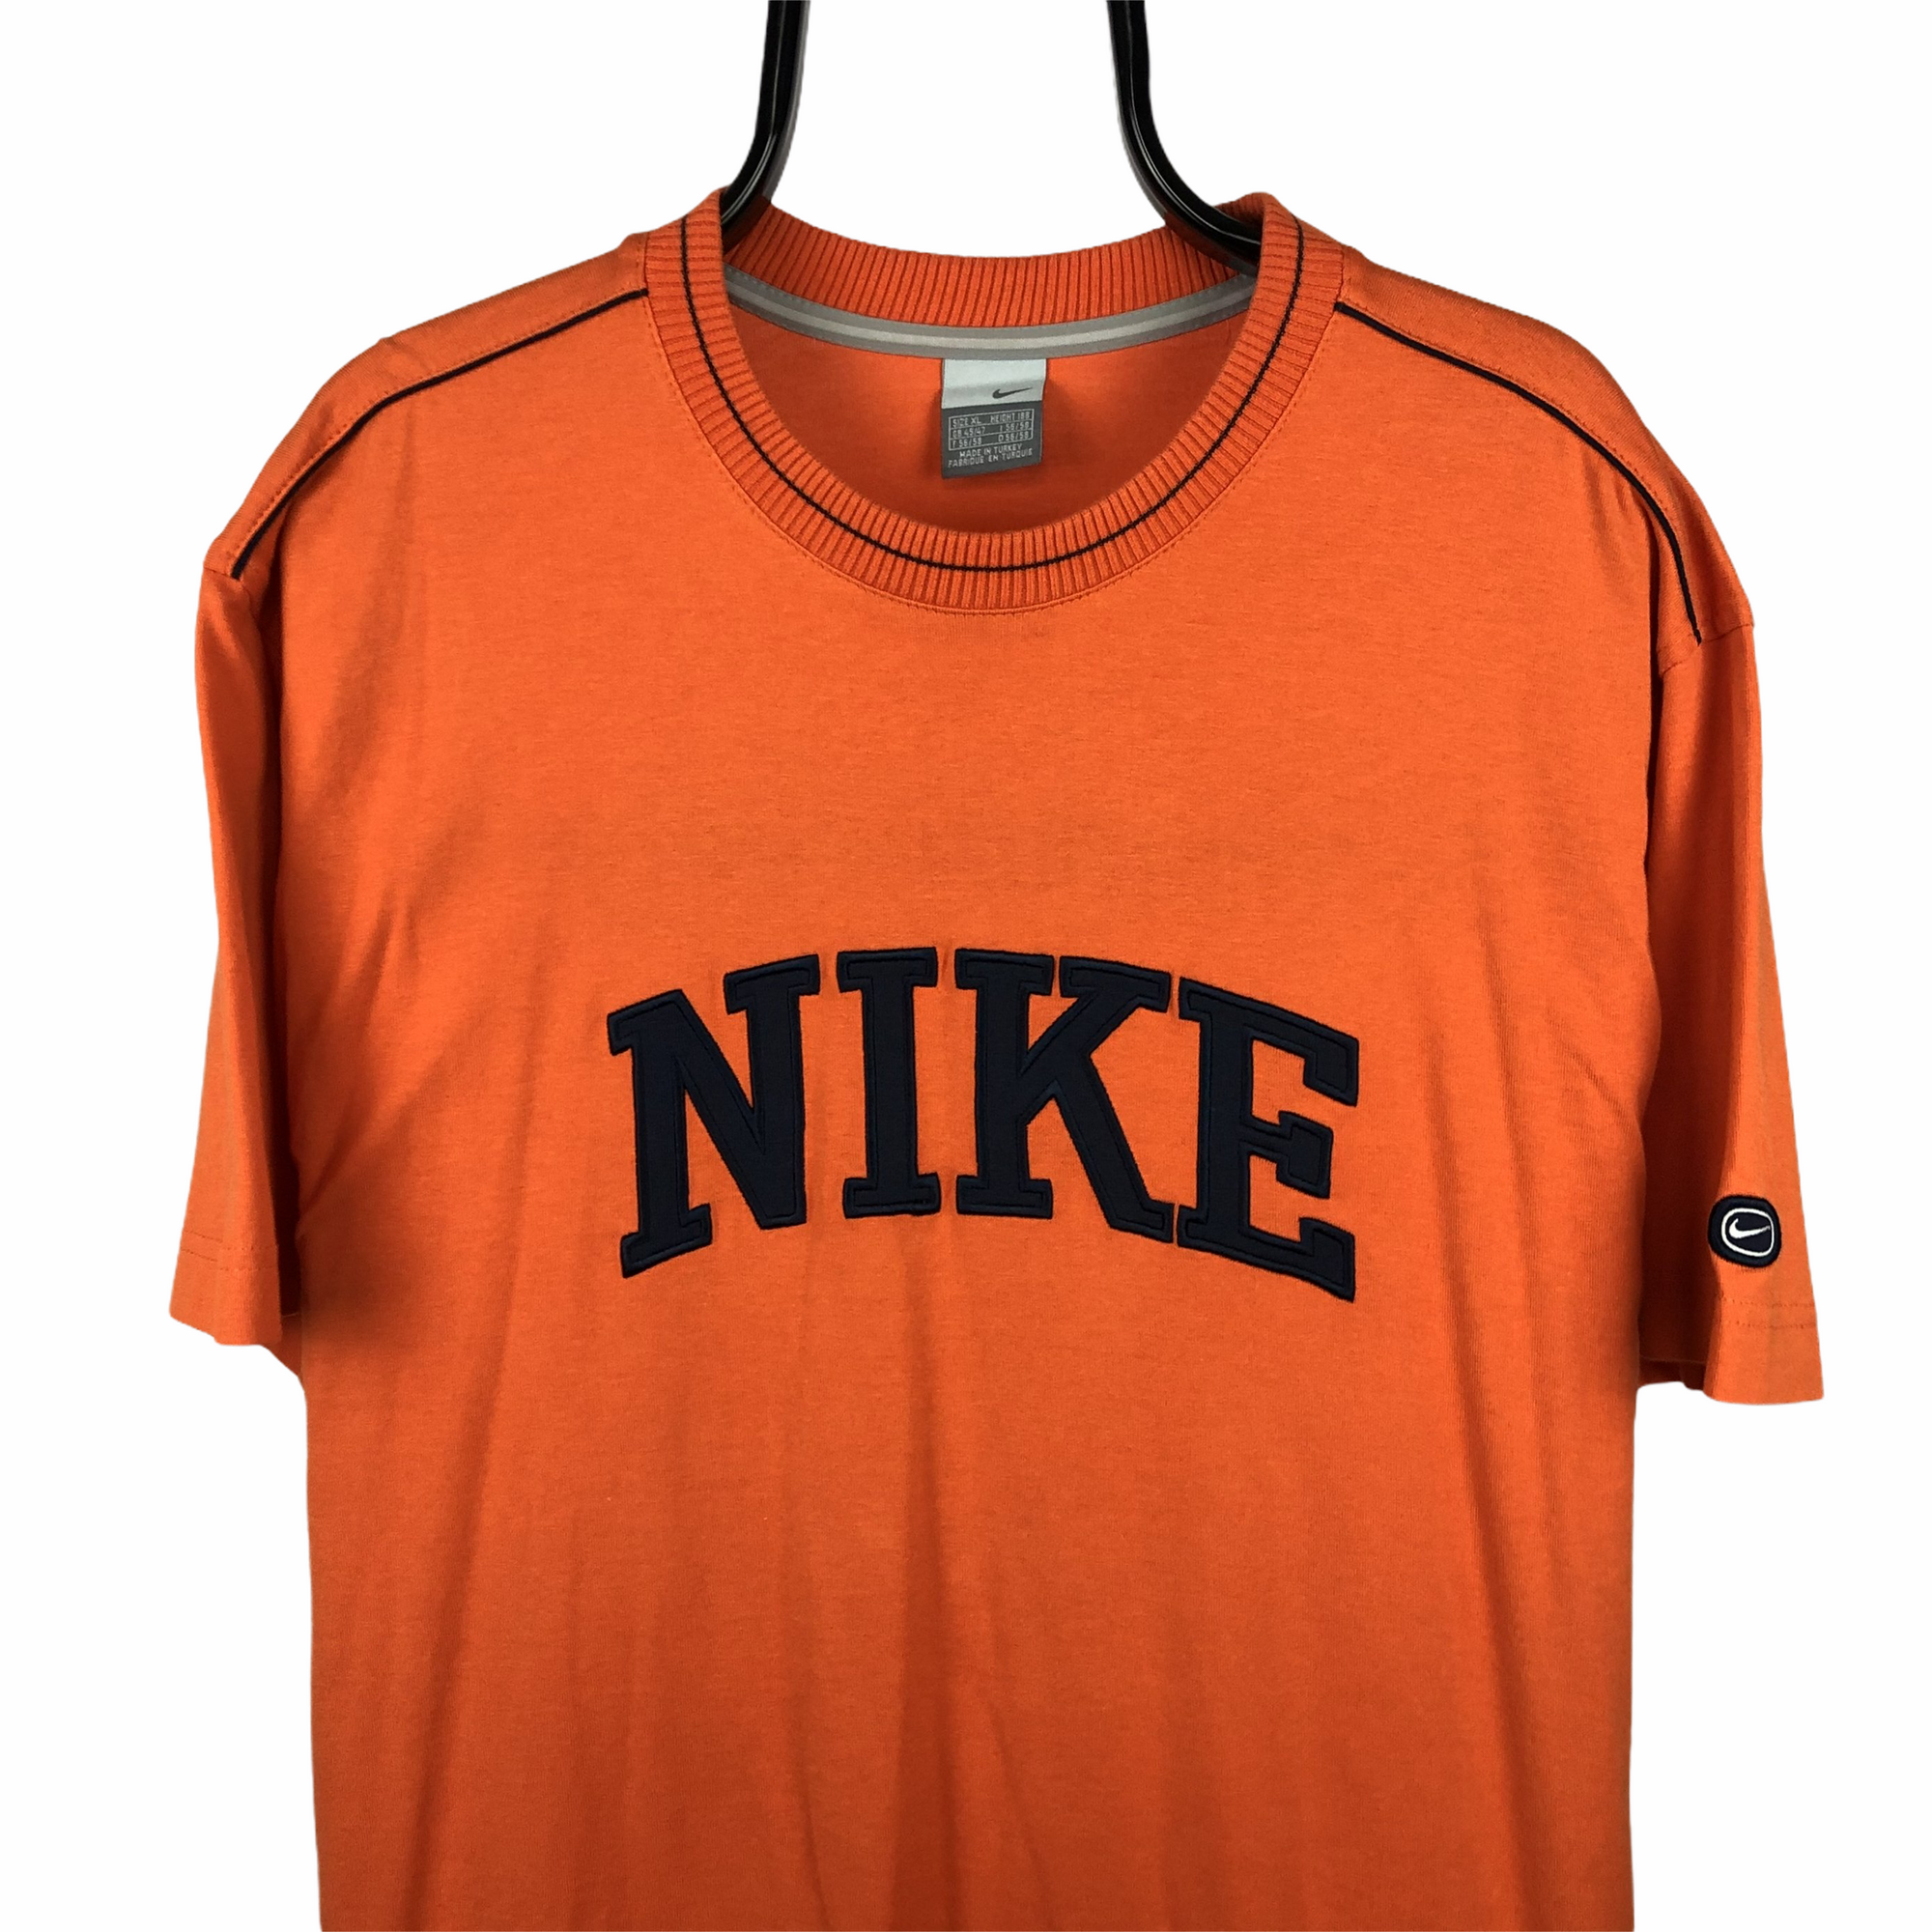 Vintage Nike Spellout Tee in Orange/Navy - Men's Large/Women's XL